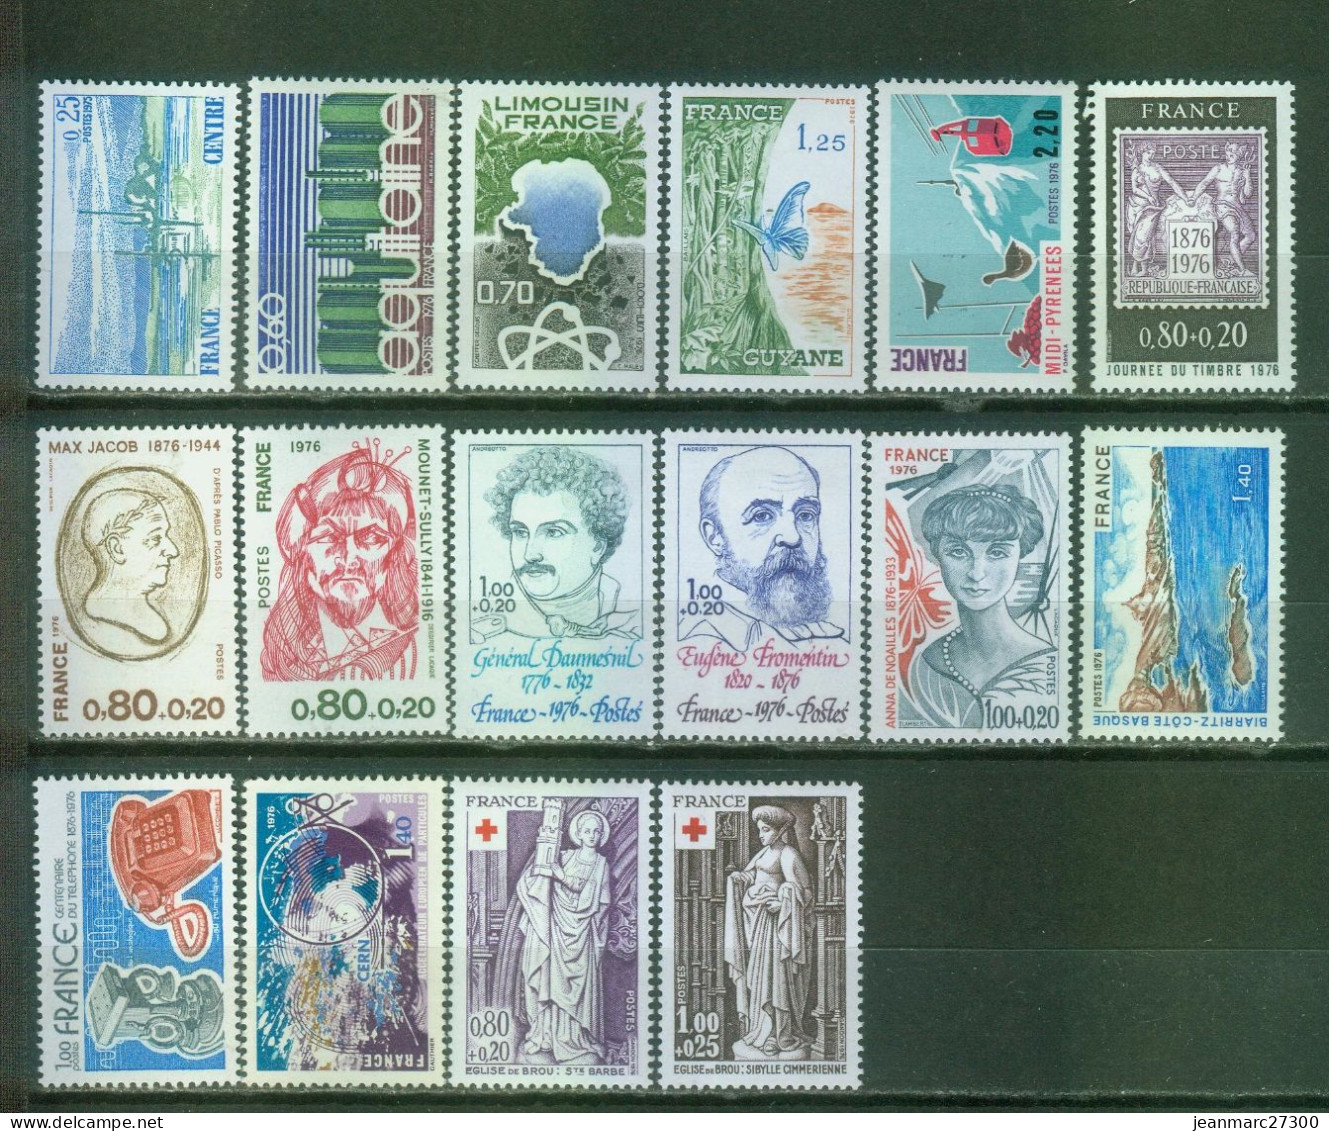 YT N° 1863 à 1866 1870 1881 1882 1896 à 1898 1903 1905 1908 1910 1911 Neufs 1976 - Unused Stamps